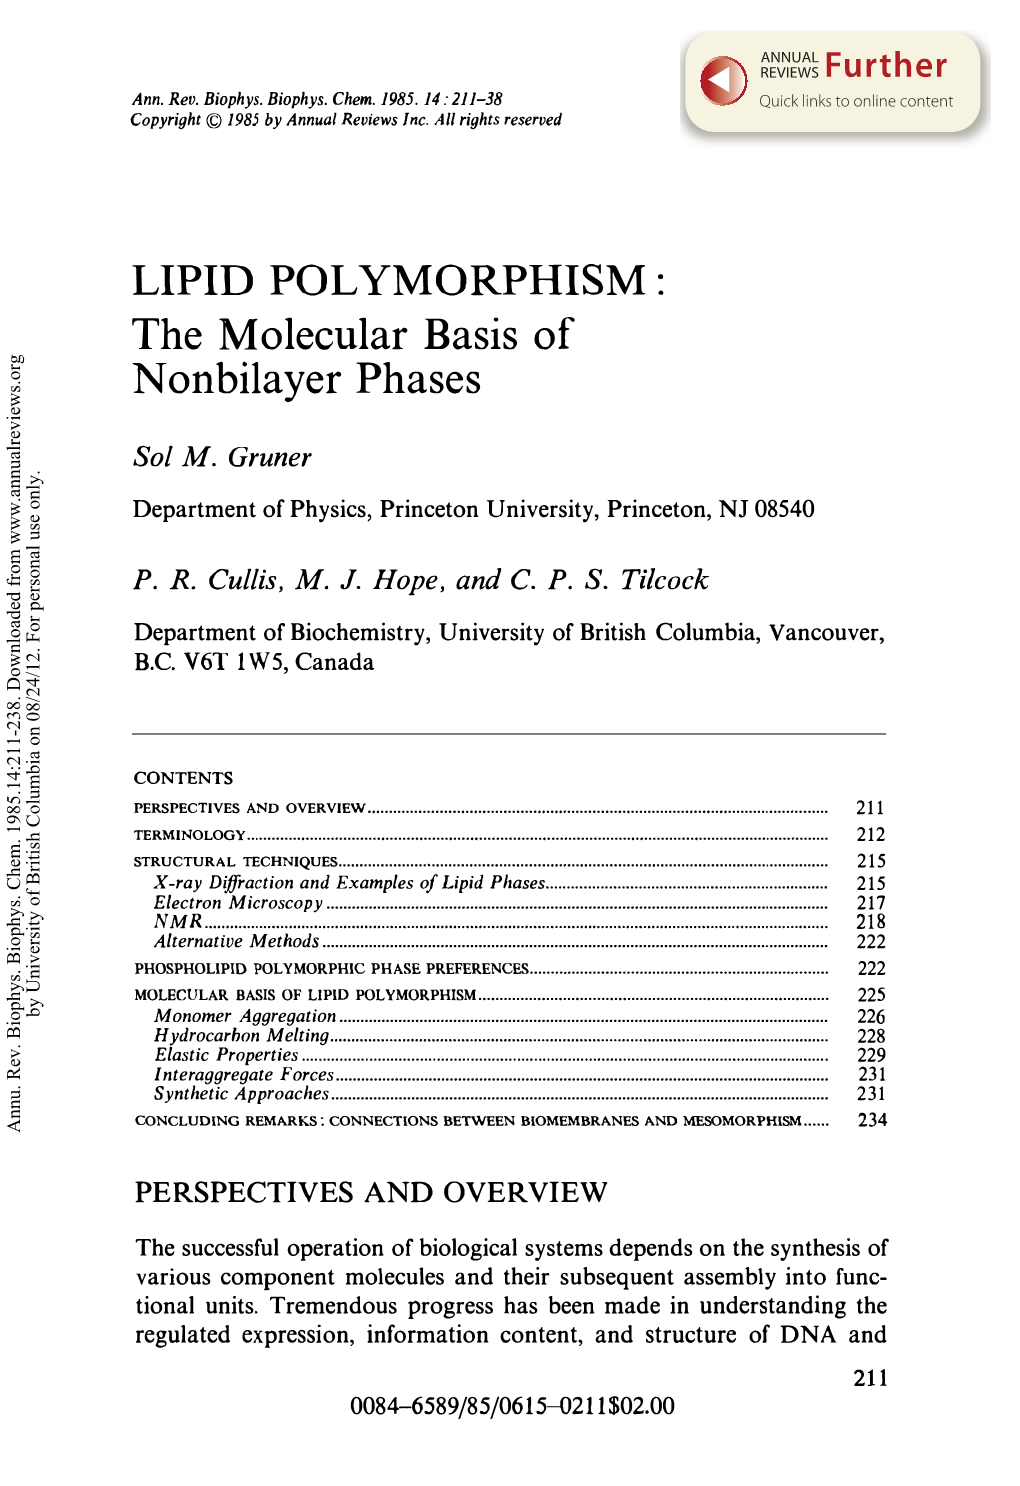 Lipid Polymorphism:The Molecular